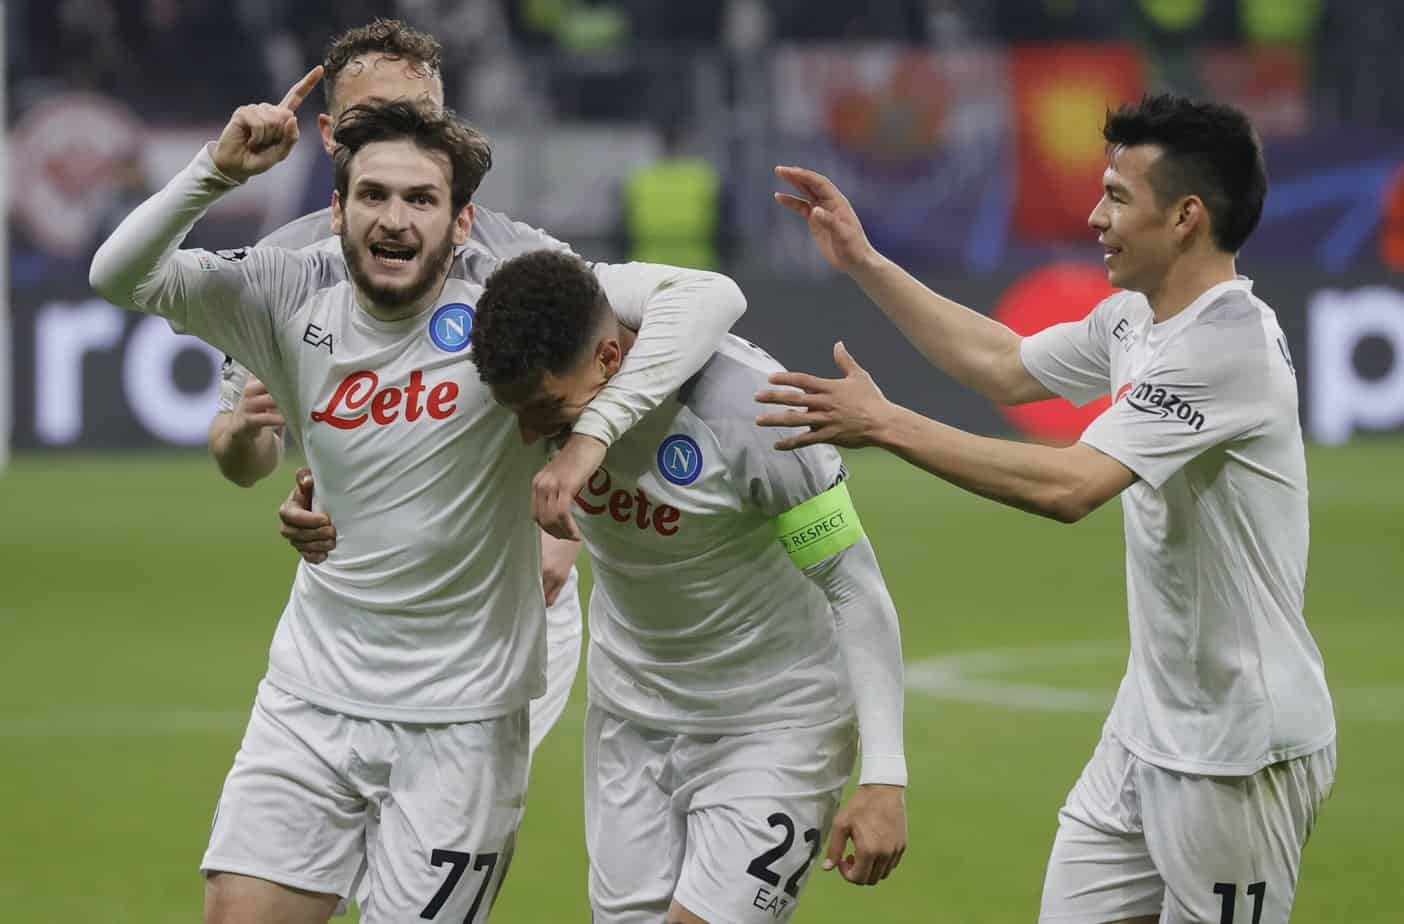 Rodadas de 16: Napoli x Eintracht Frankfurt Escolha de apostas grátis